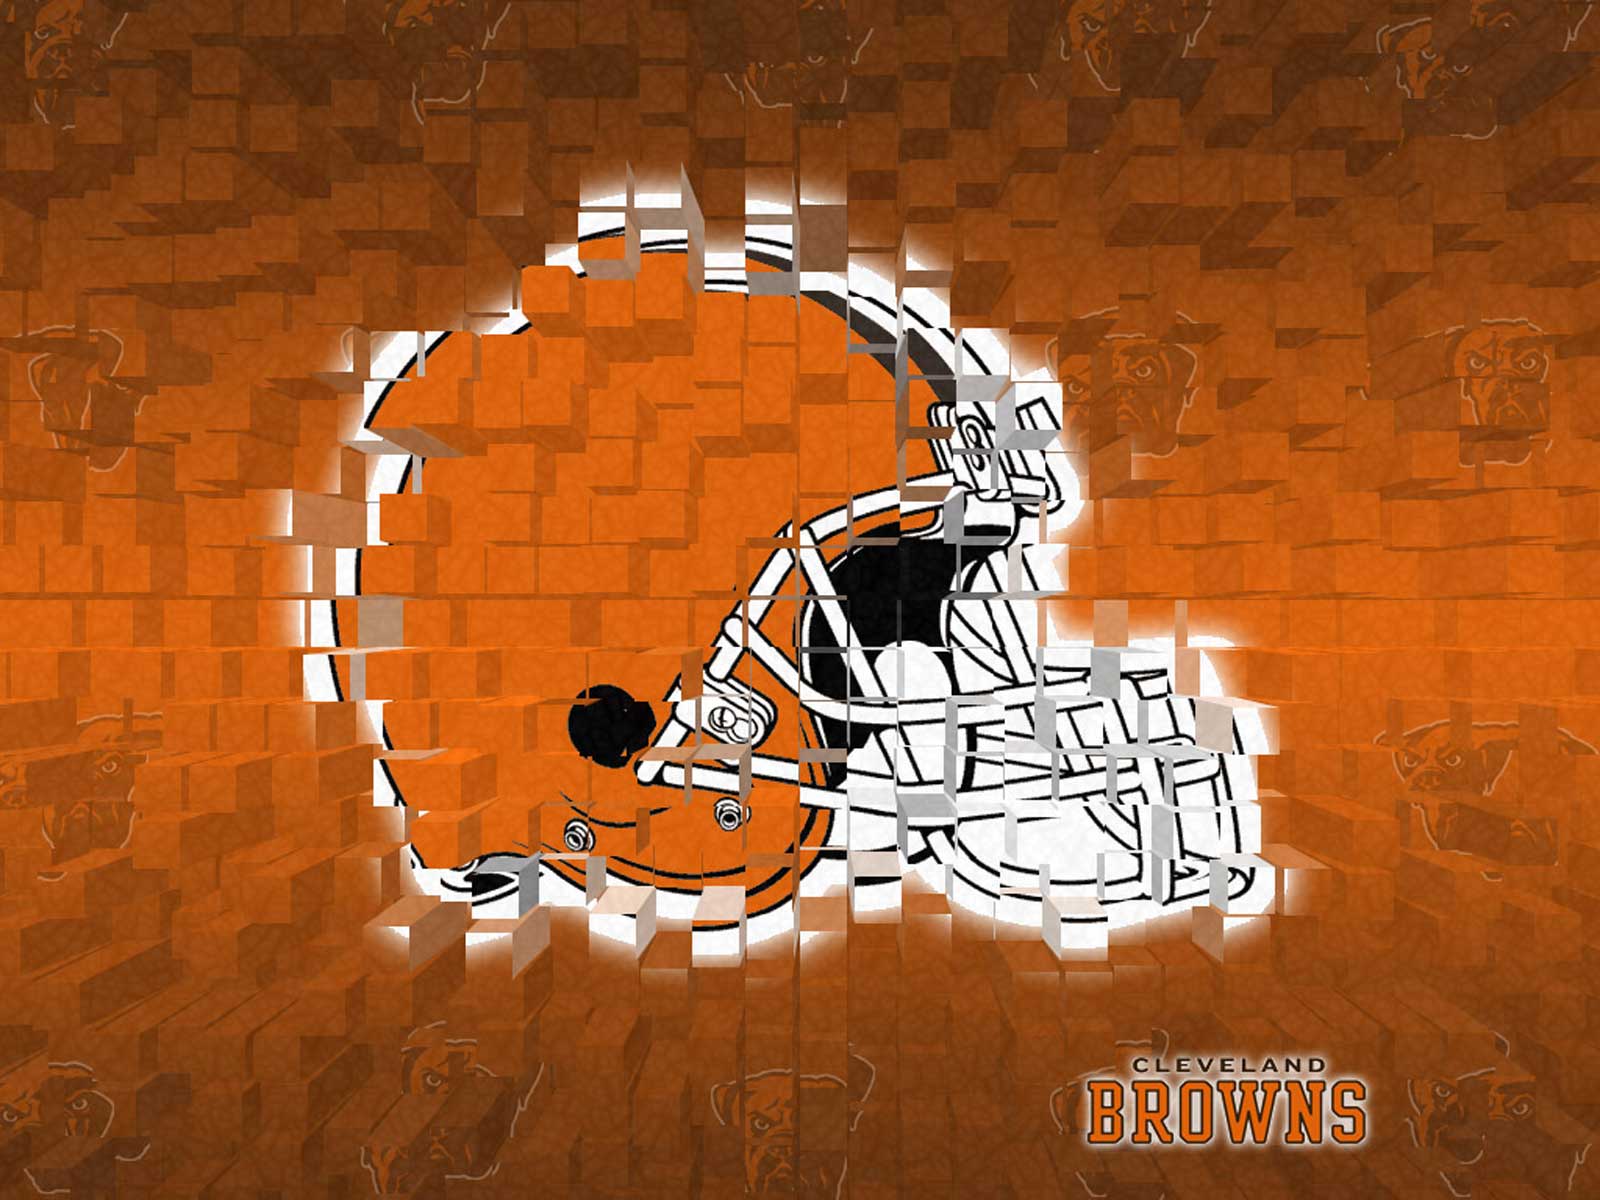 Cleveland Browns Background Pics 24440 Image. wallgraf